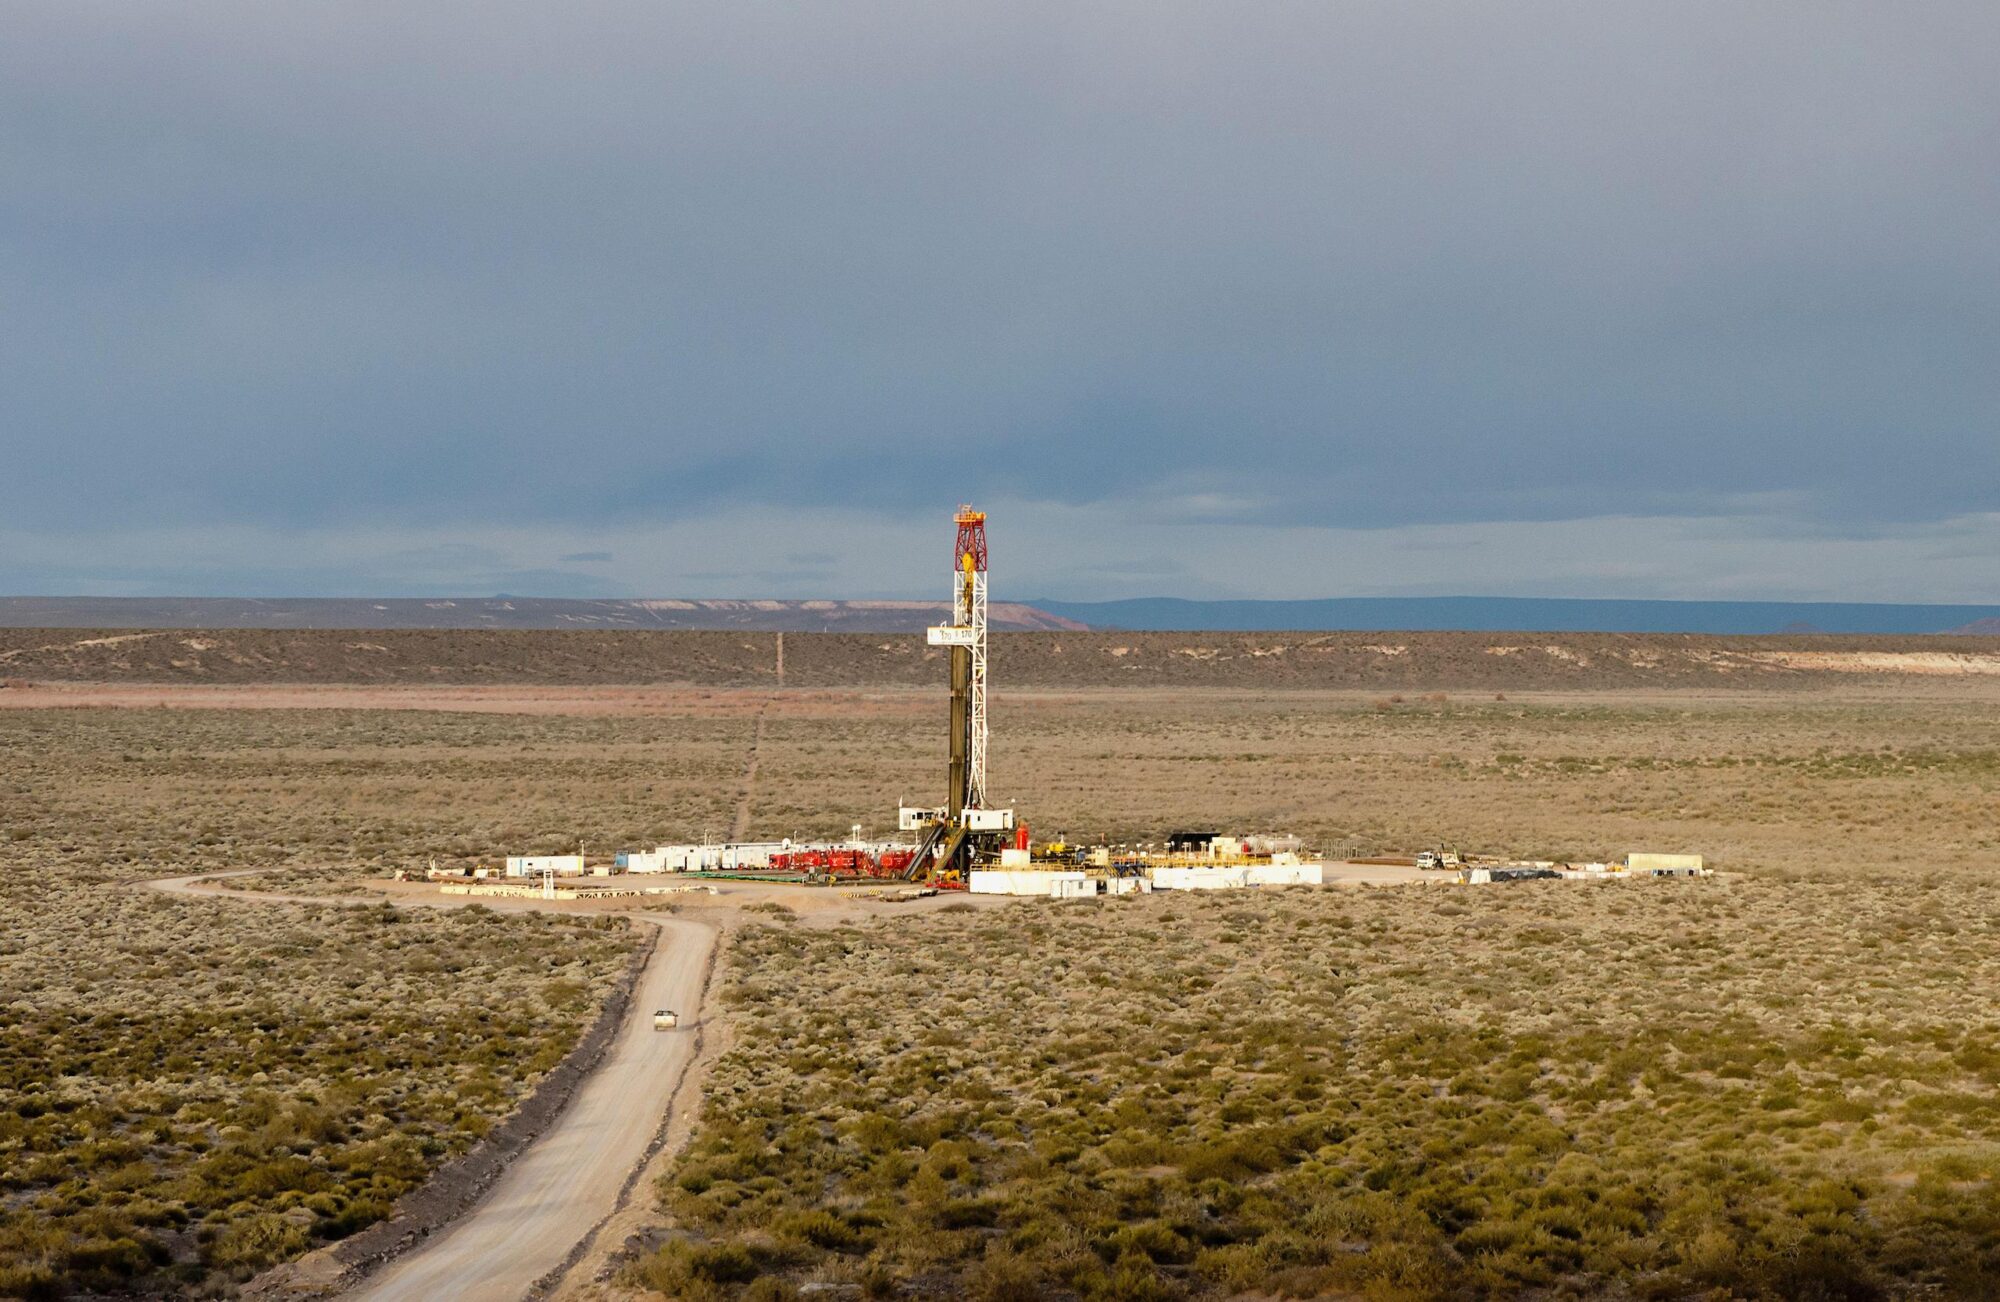 <p>A drilling platform in Vaca Muerta, Neuquén province (Image: Titus Moser / Alamy)</p>